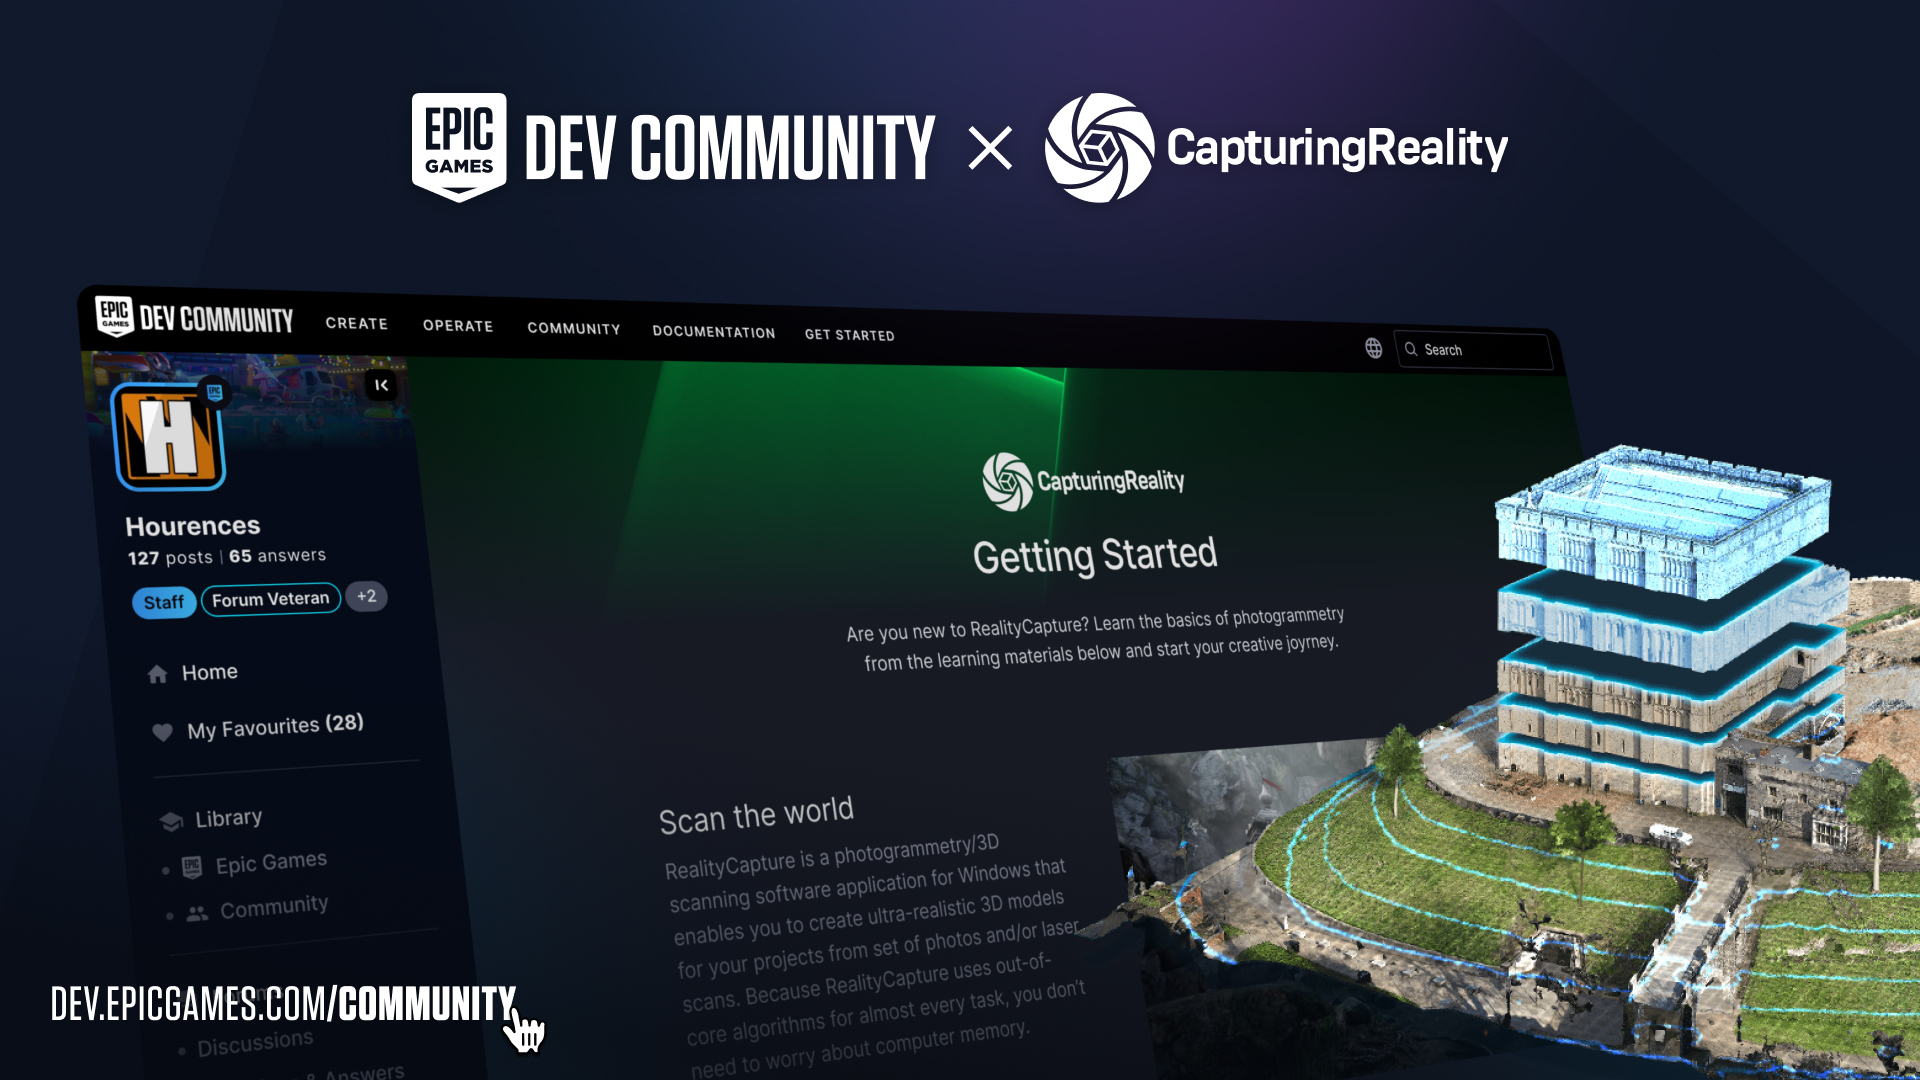 Capturing Reality Epic Games DEV Community